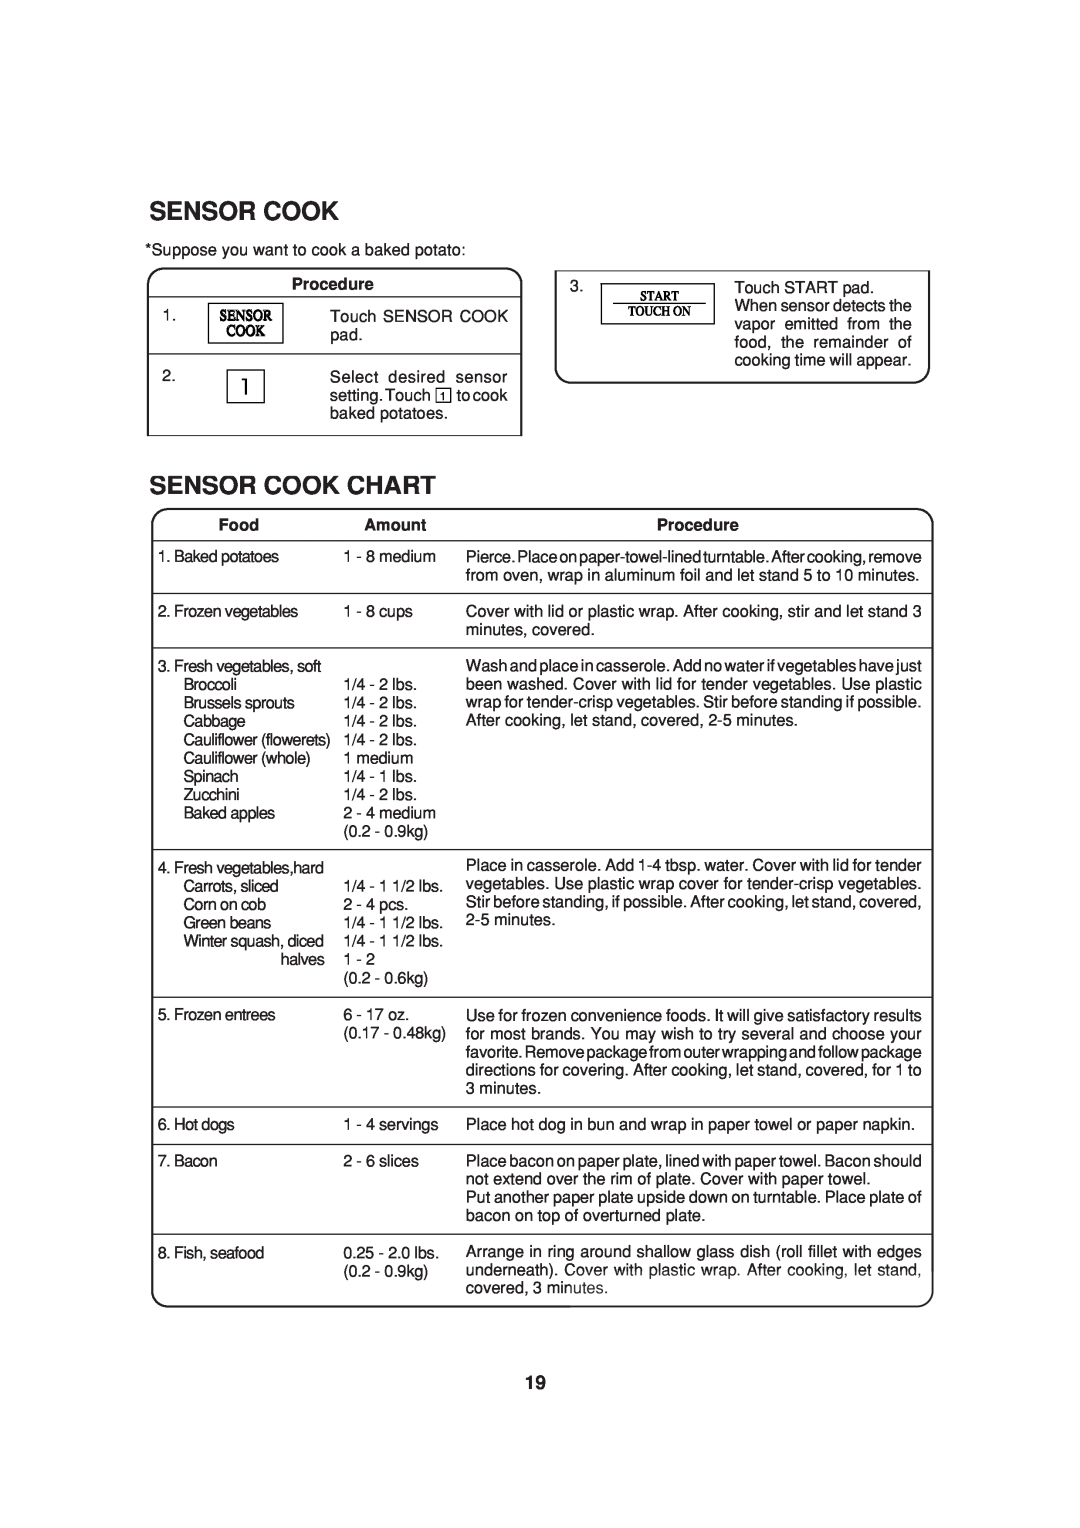 Sharp R-930AK, R-930AW, R-930CS operation manual Sensor Cook Chart, Procedure, Food, Amount 